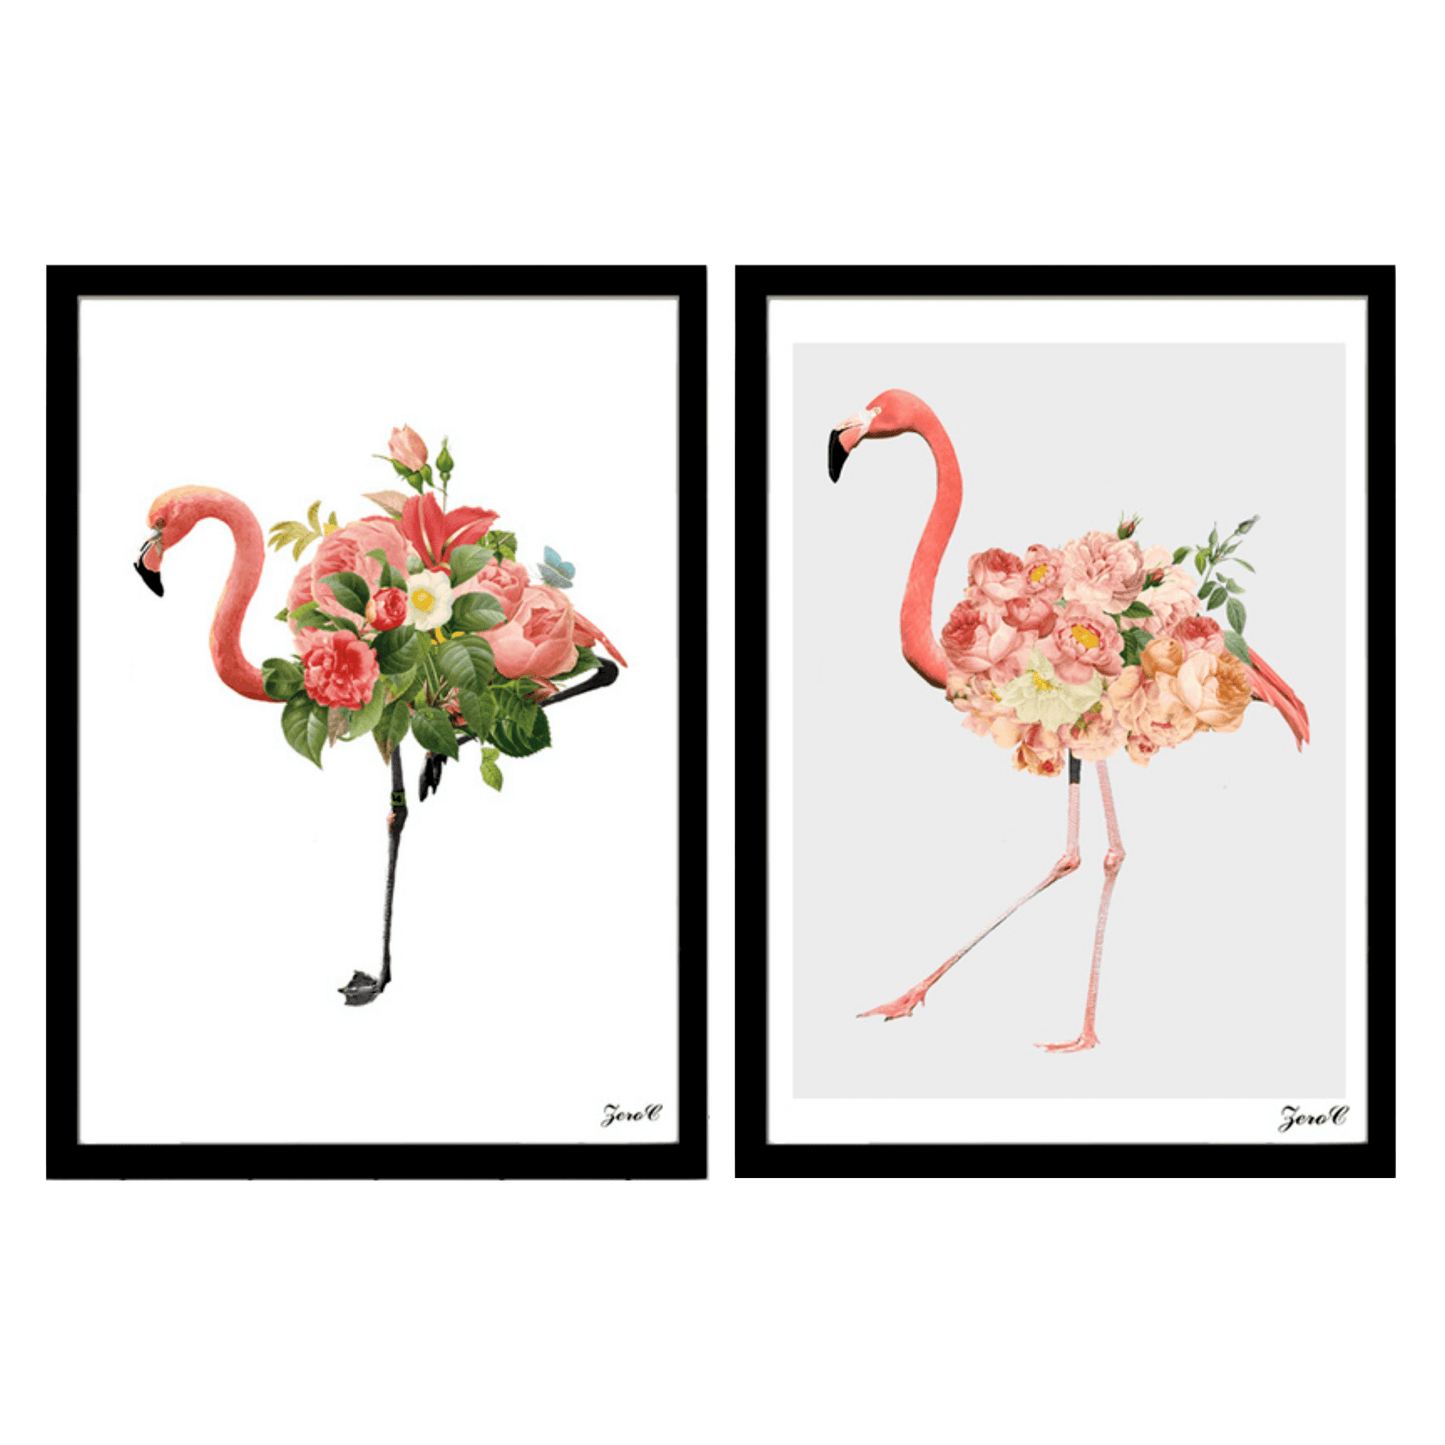 Floral Flamingo Artwork Canvas - Nordic Side - 